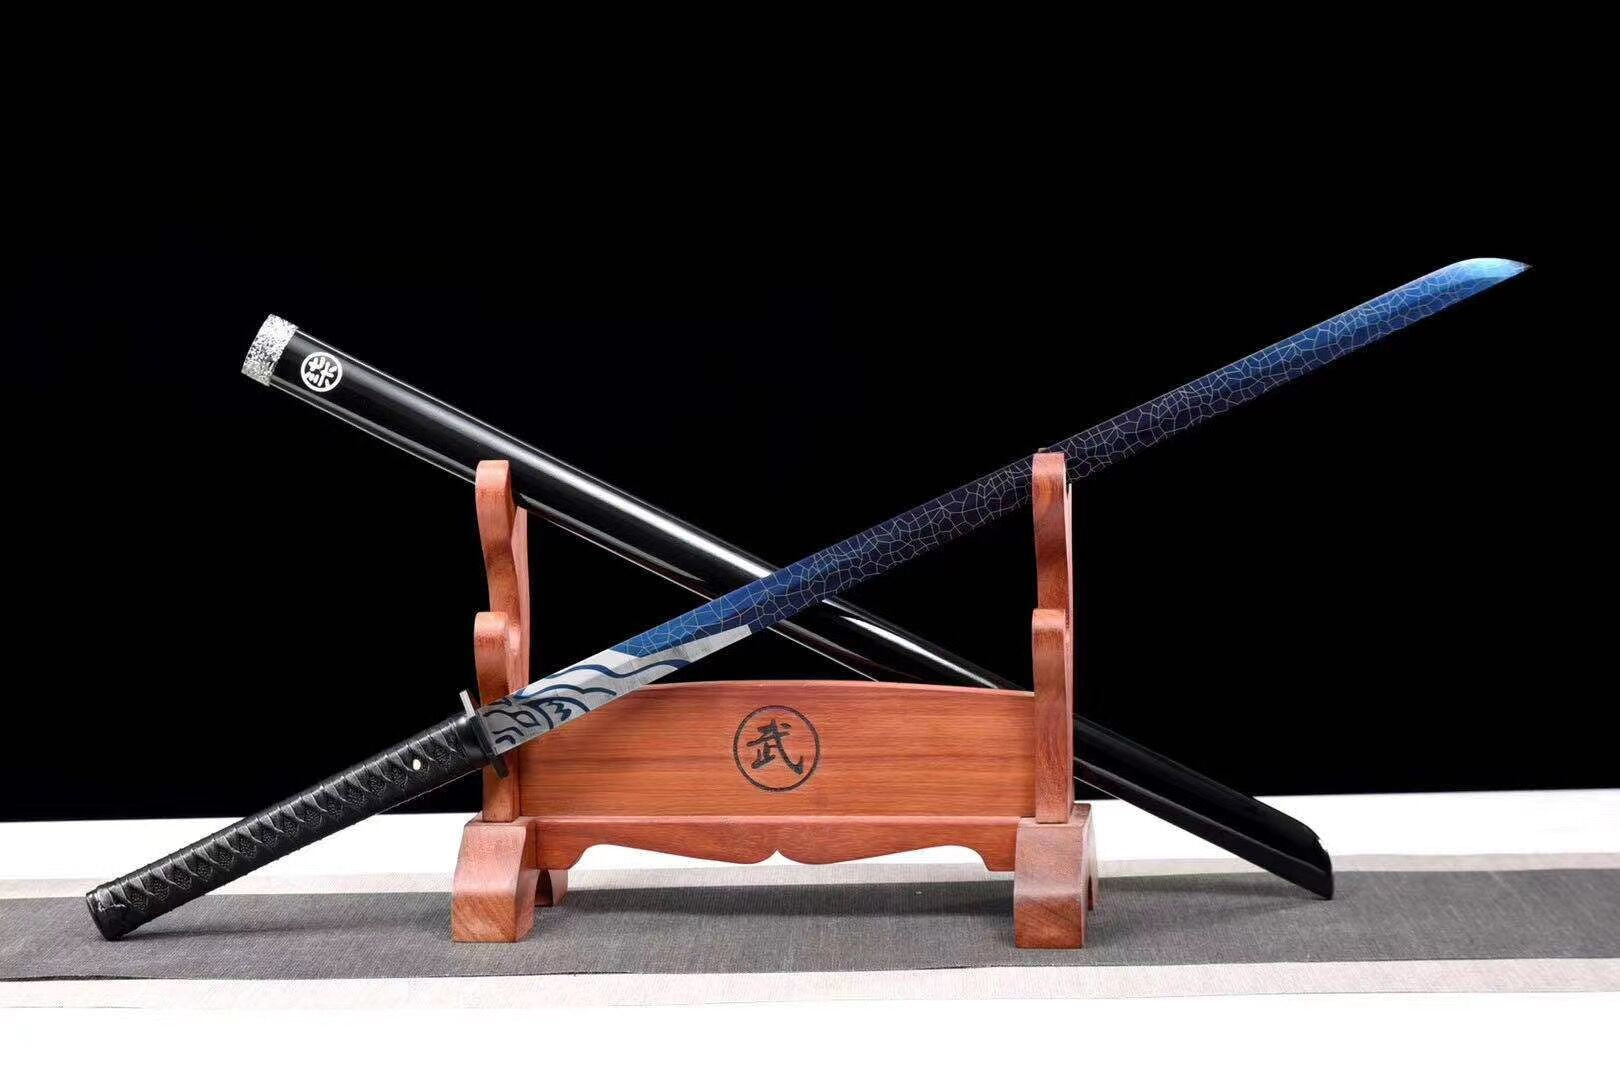 Magic Blade,Thousand shard demon dagger,Baked Blue Series,Tang-Horizontal sword,Real Tang Sword,Handmade Chinese Sword,Longquan sword